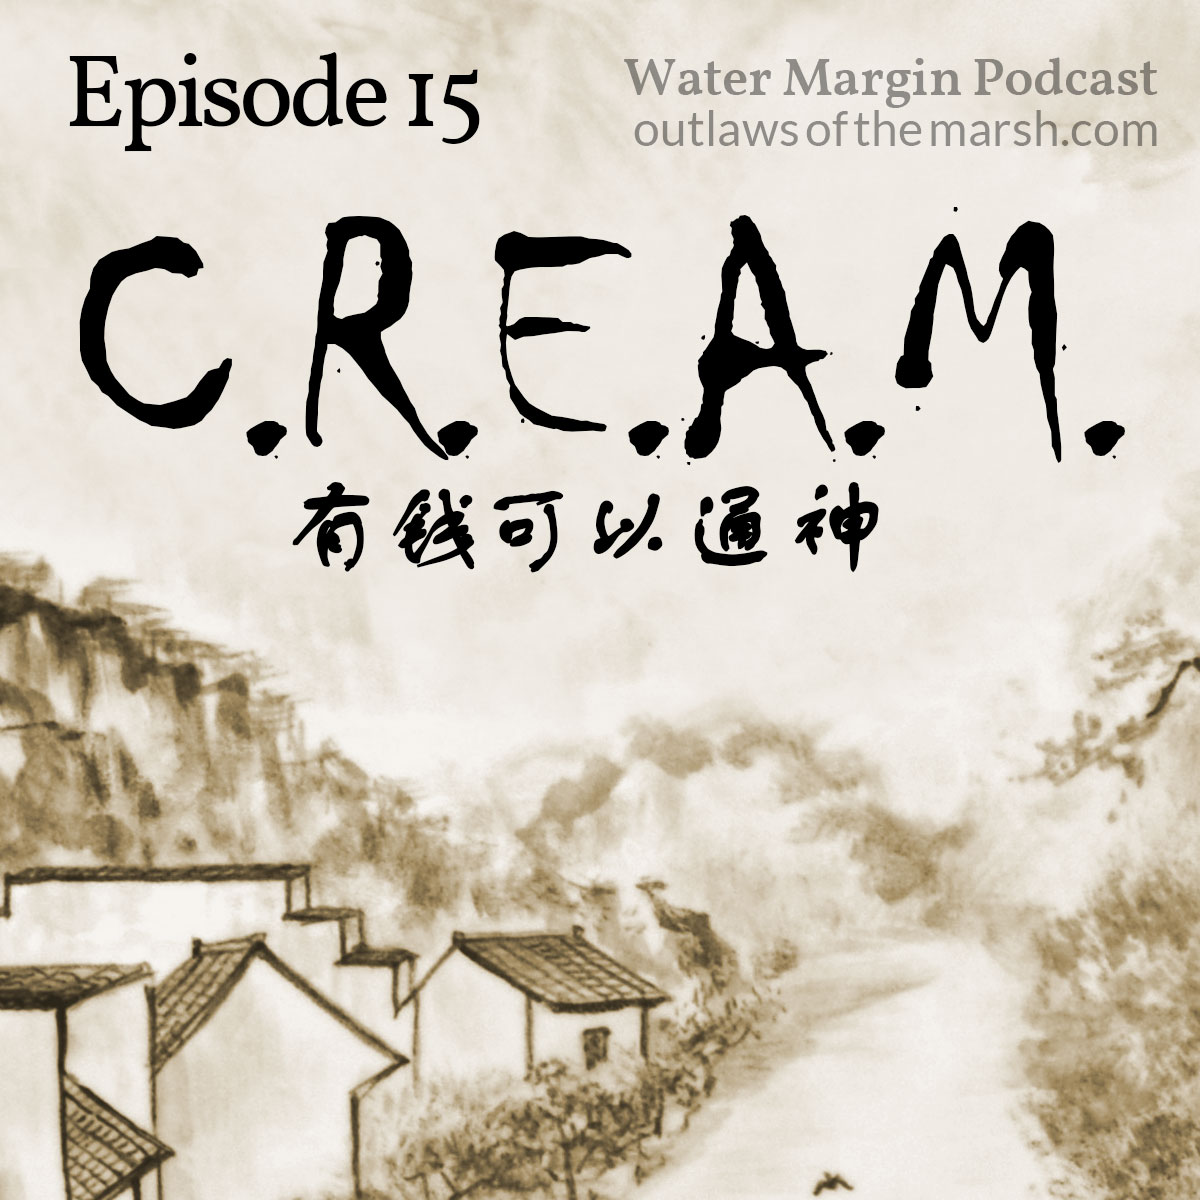 Water Margin Podcast: Episode 015